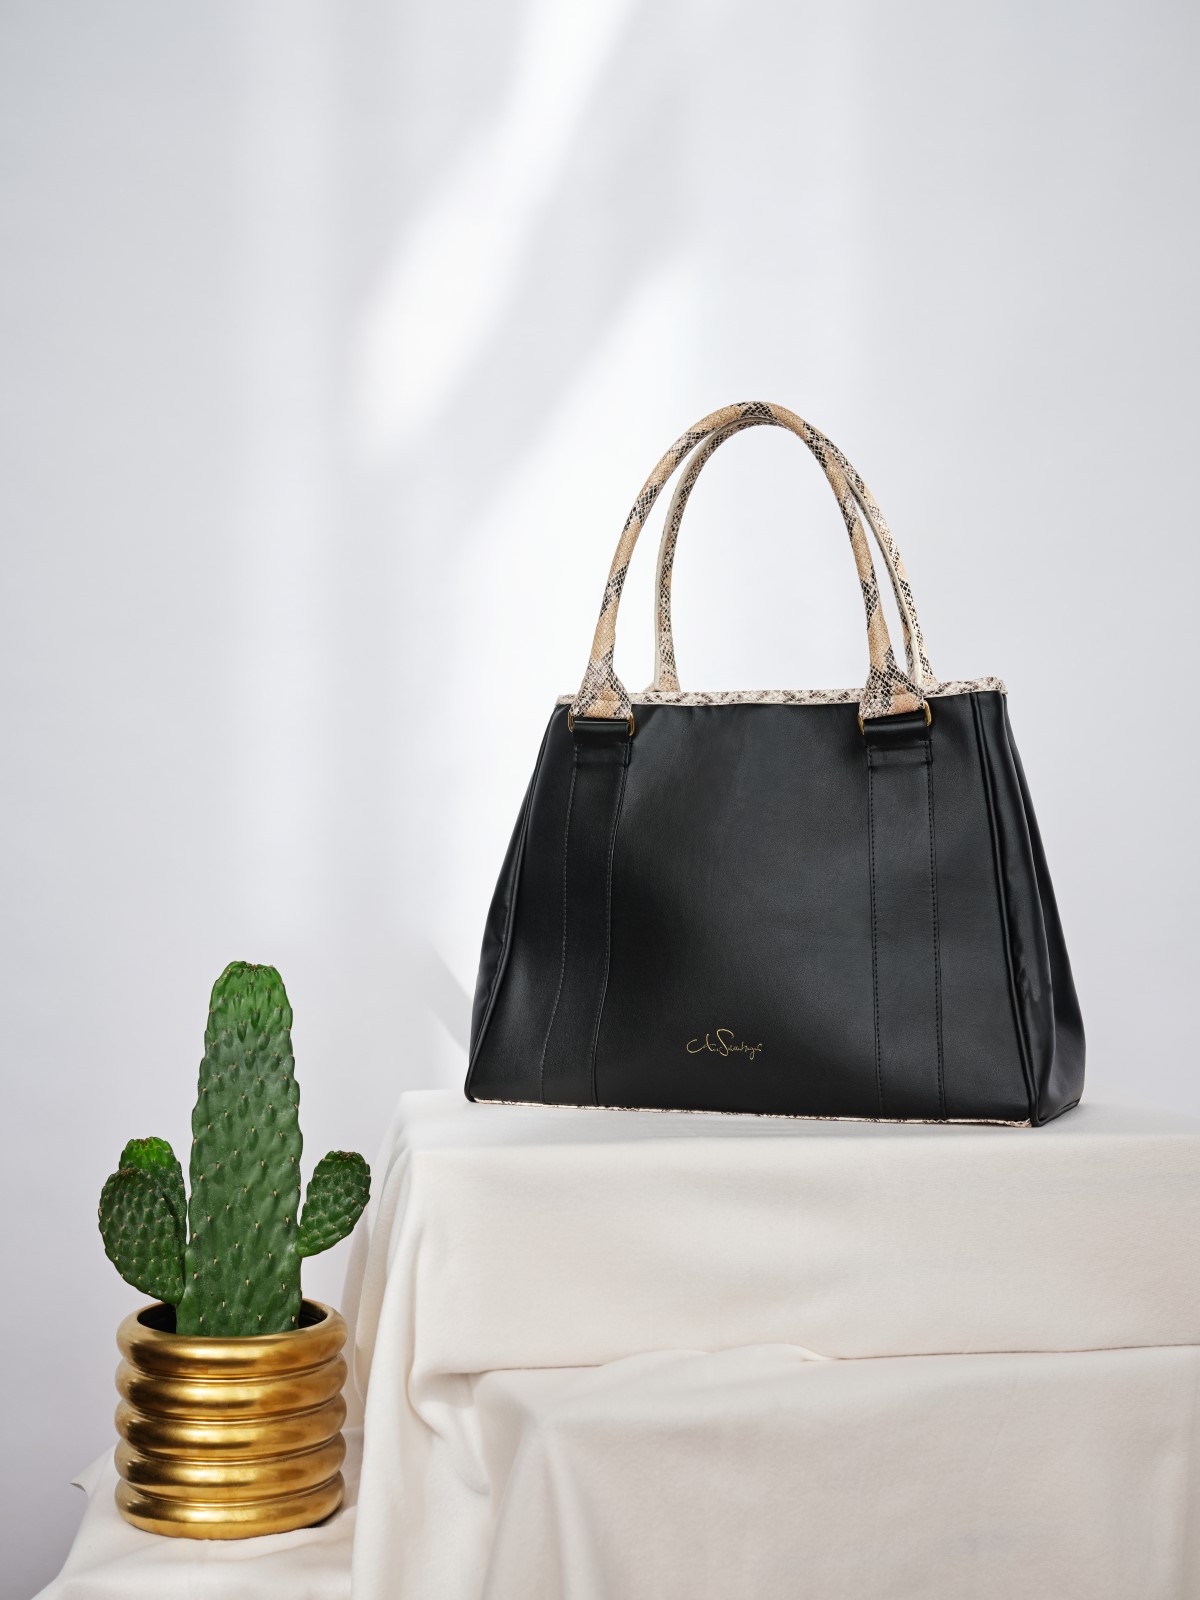 Black Vegan Leather Handbag With Cactus.